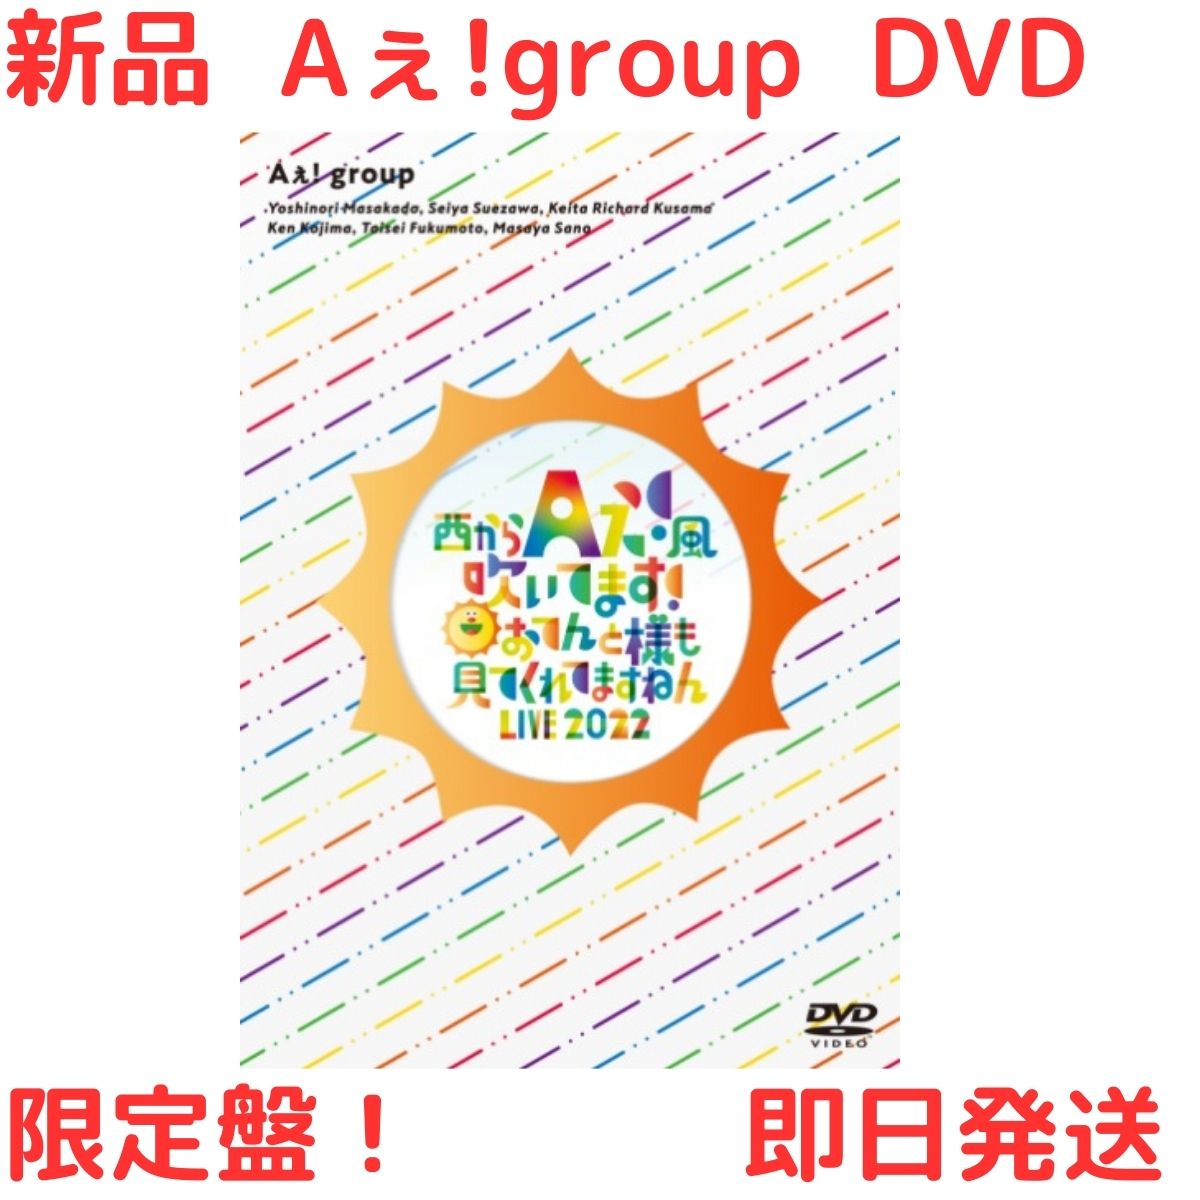 Aぇ! group DVD 